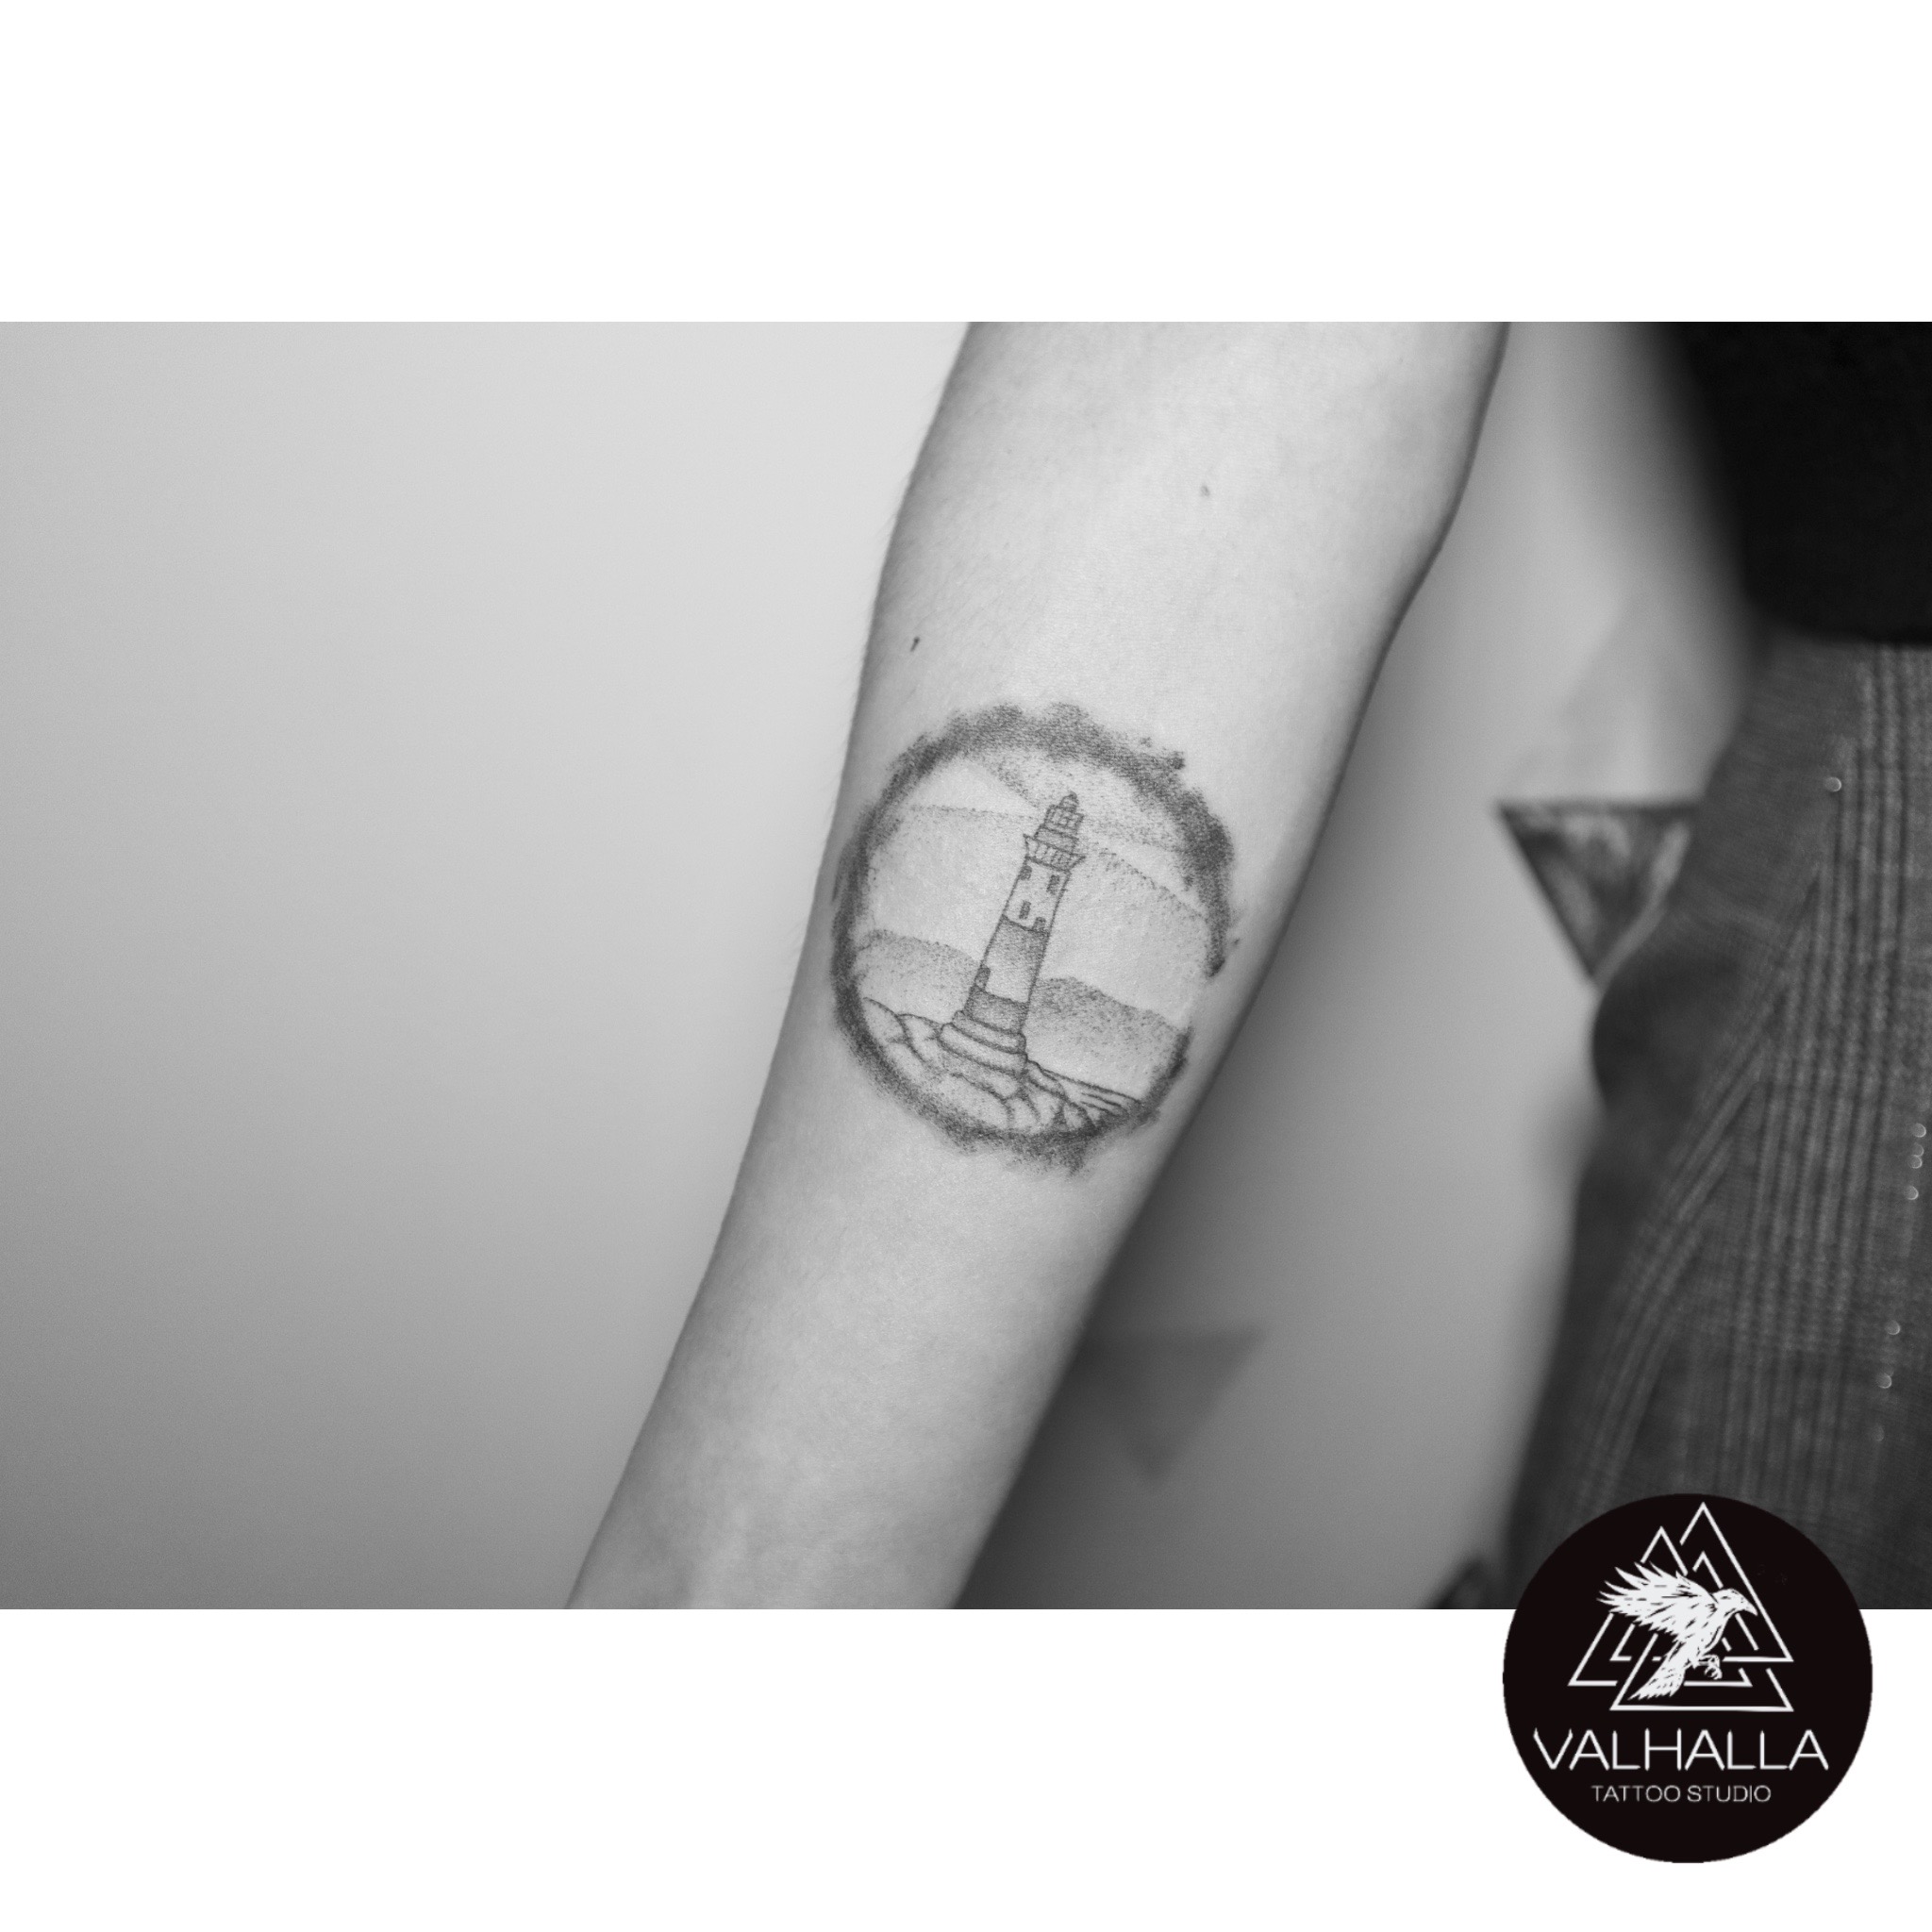 Nashville Temporary Tattoo Sticker - OhMyTat